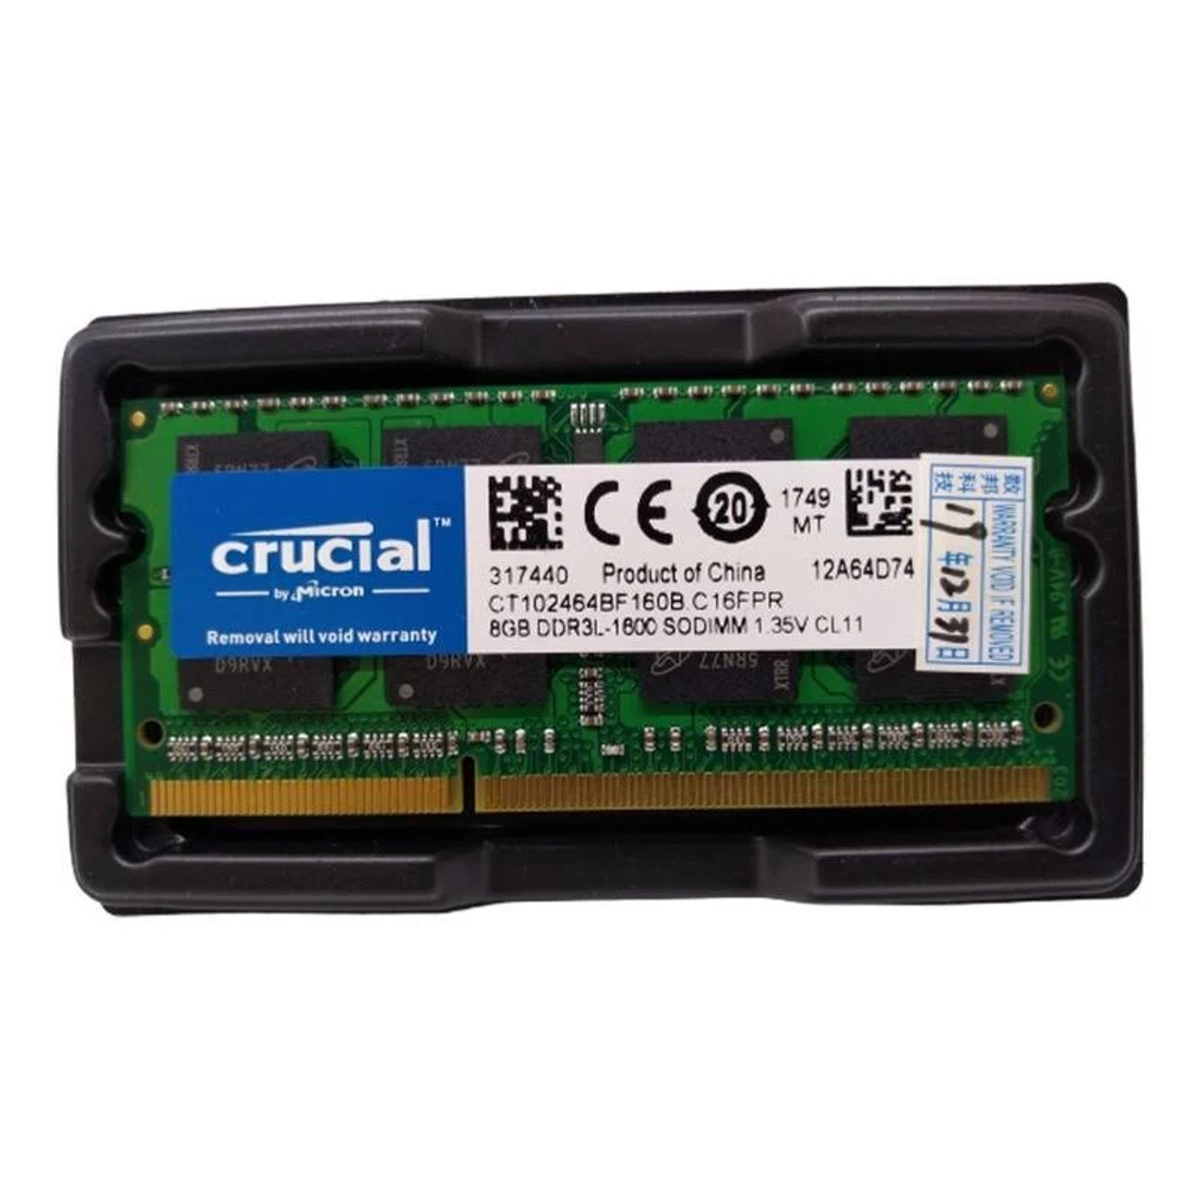 CRUCIAL CT102464BF160B Laptop-Notebook RAM DDR3L GB Arbeitsspeicher 8